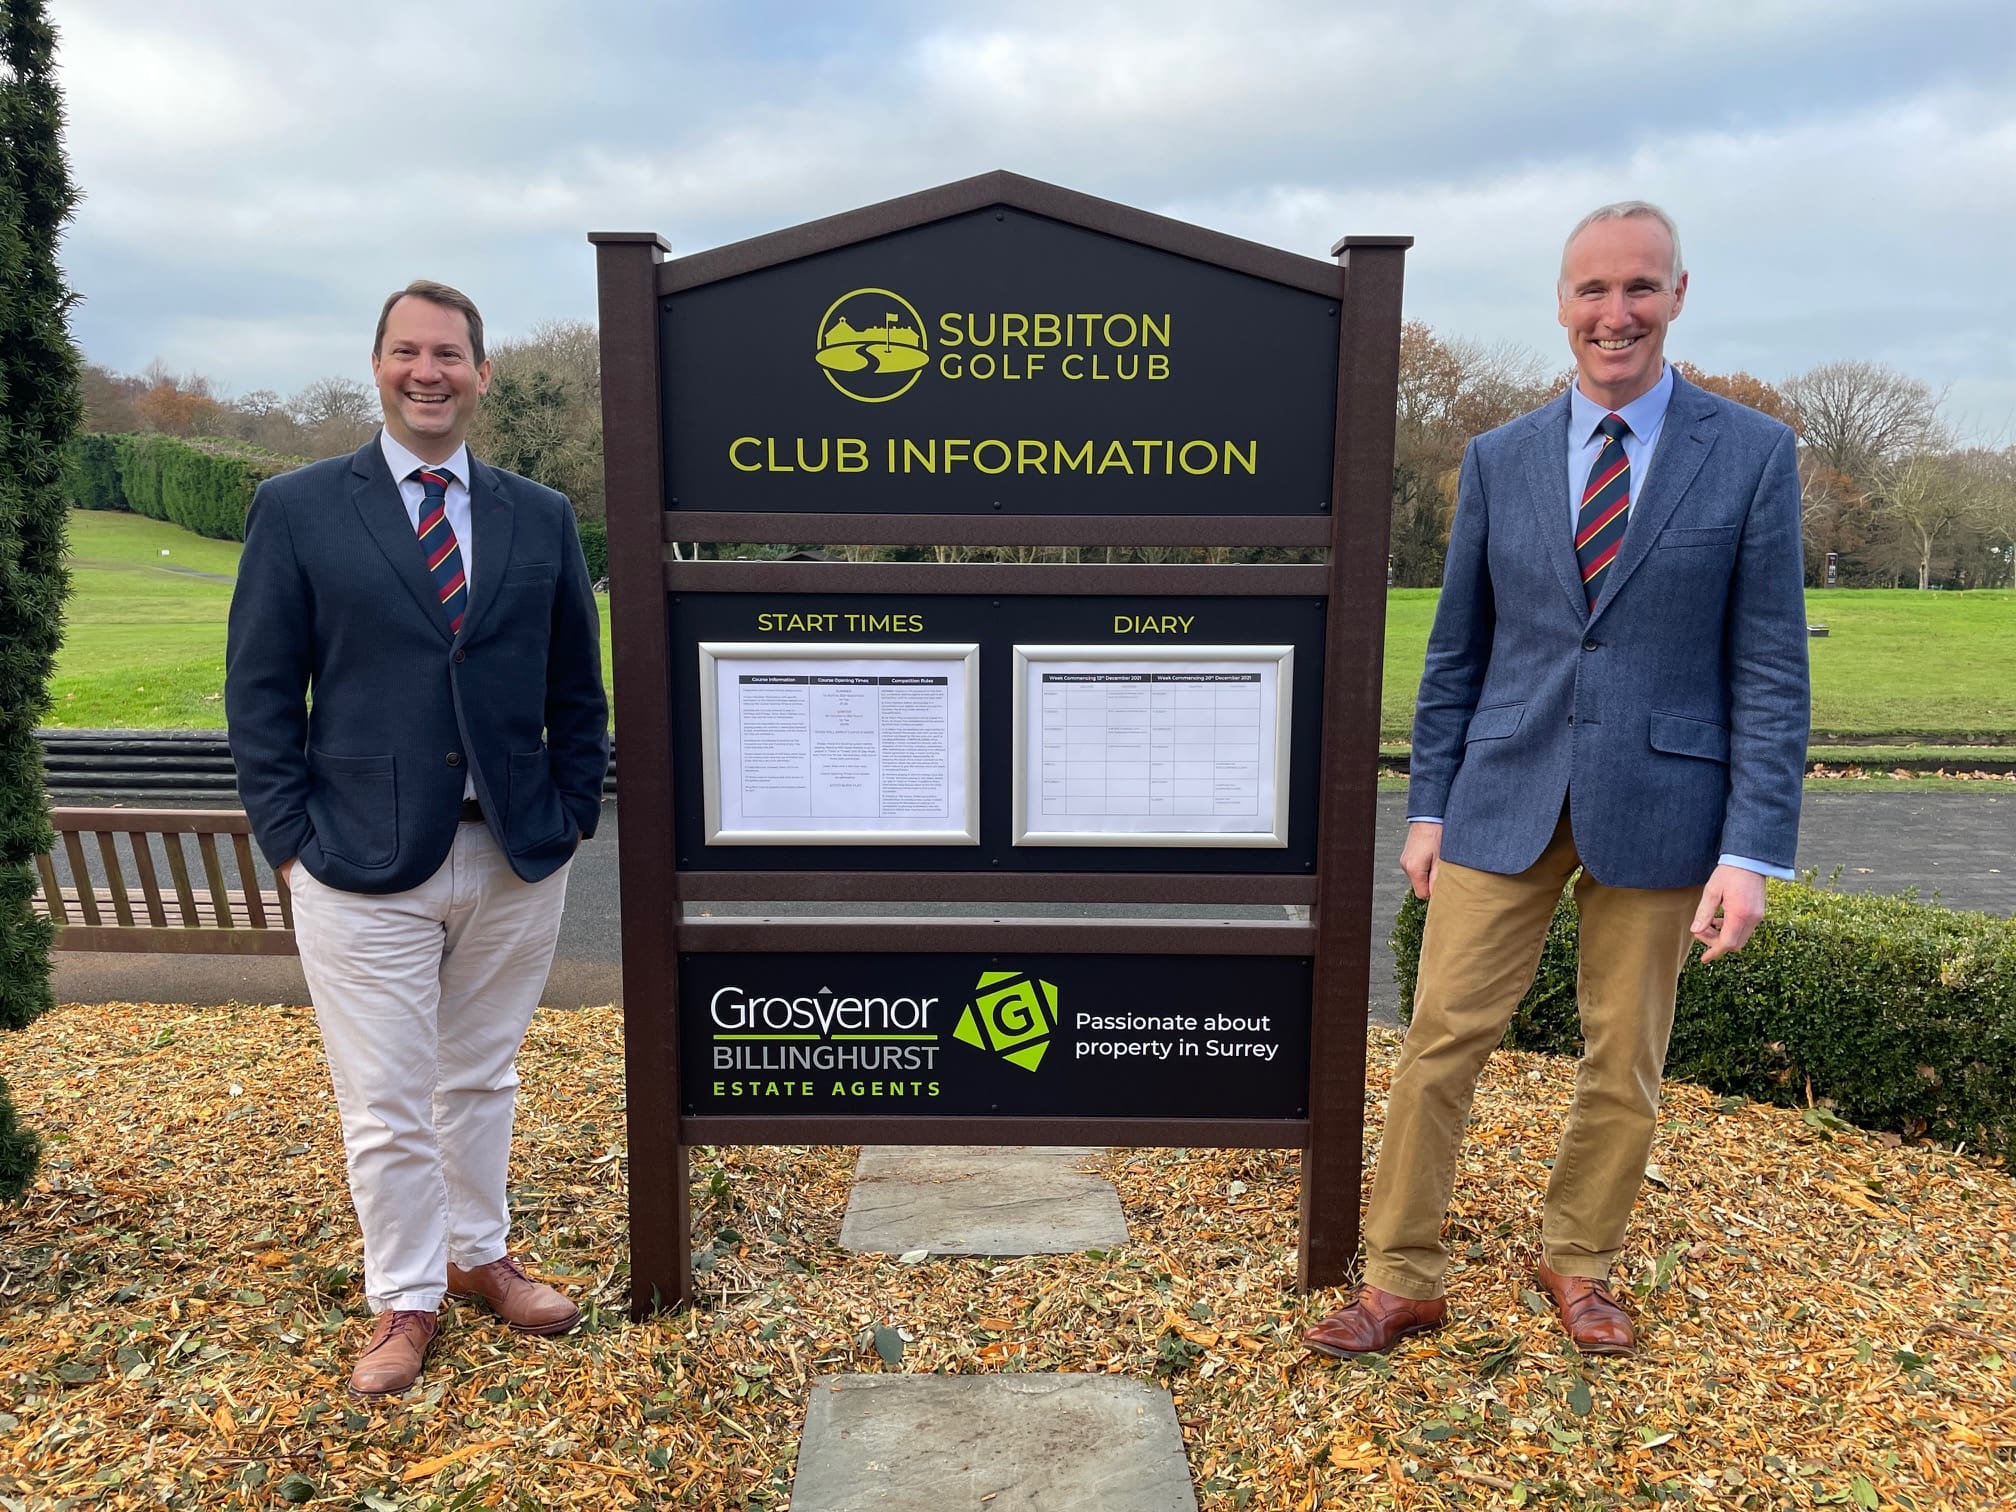 grosvenor billinghurst has agreed to sponsor surbiton golf club